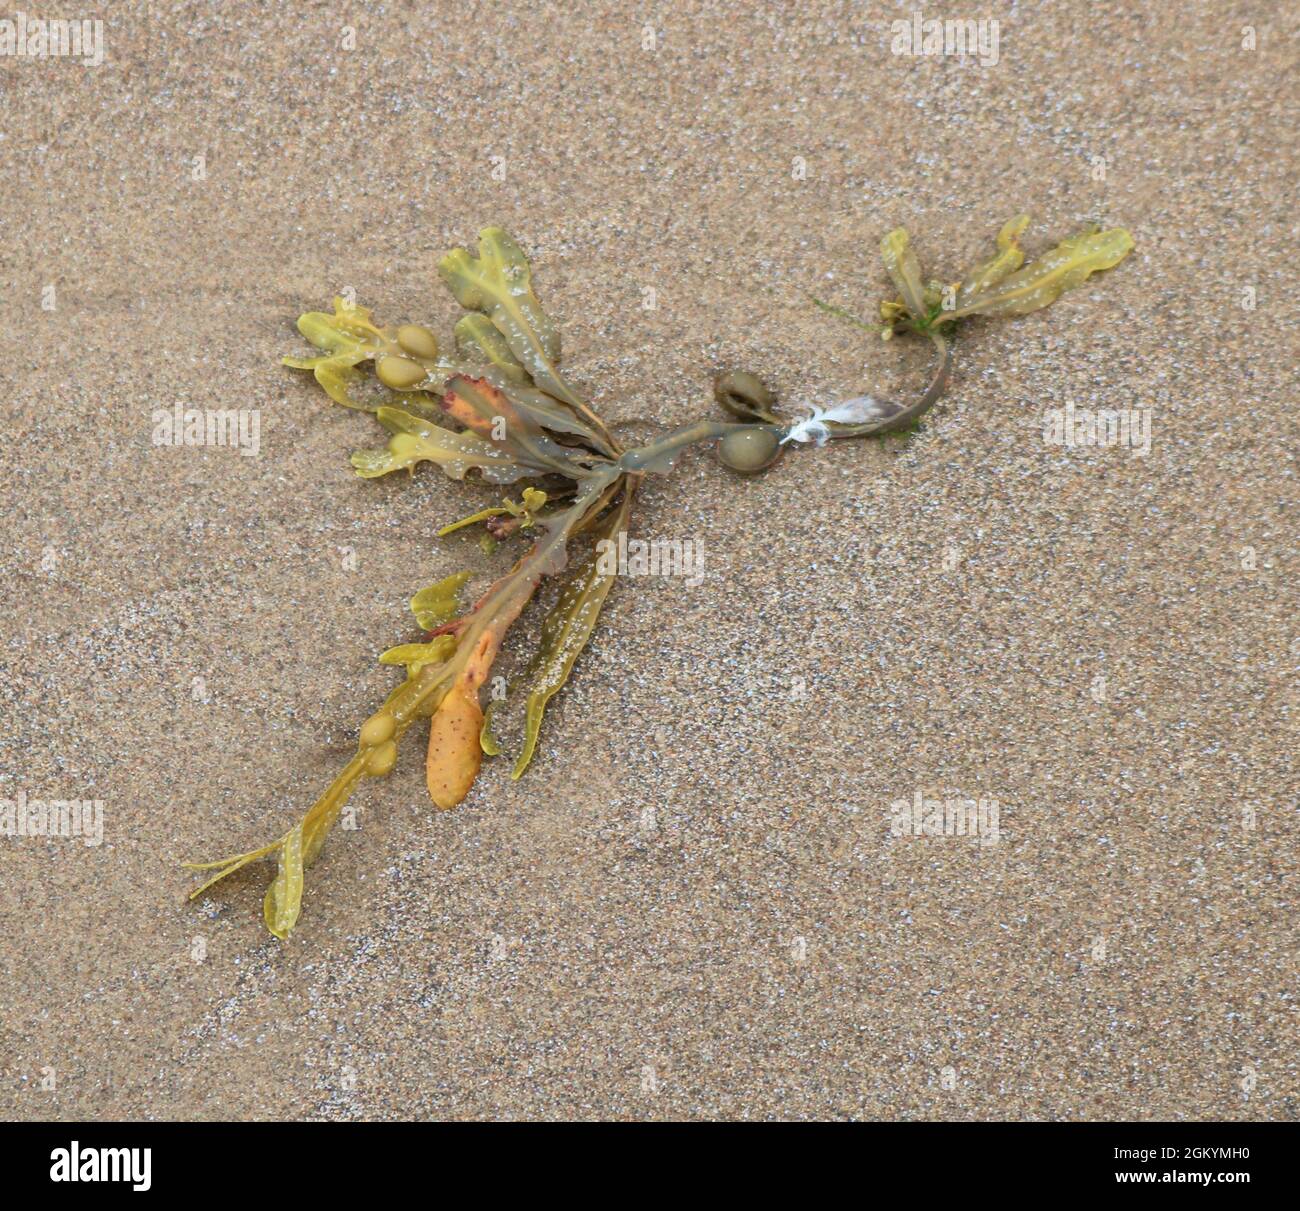 Seaweed washed up on beach. Stock Photo